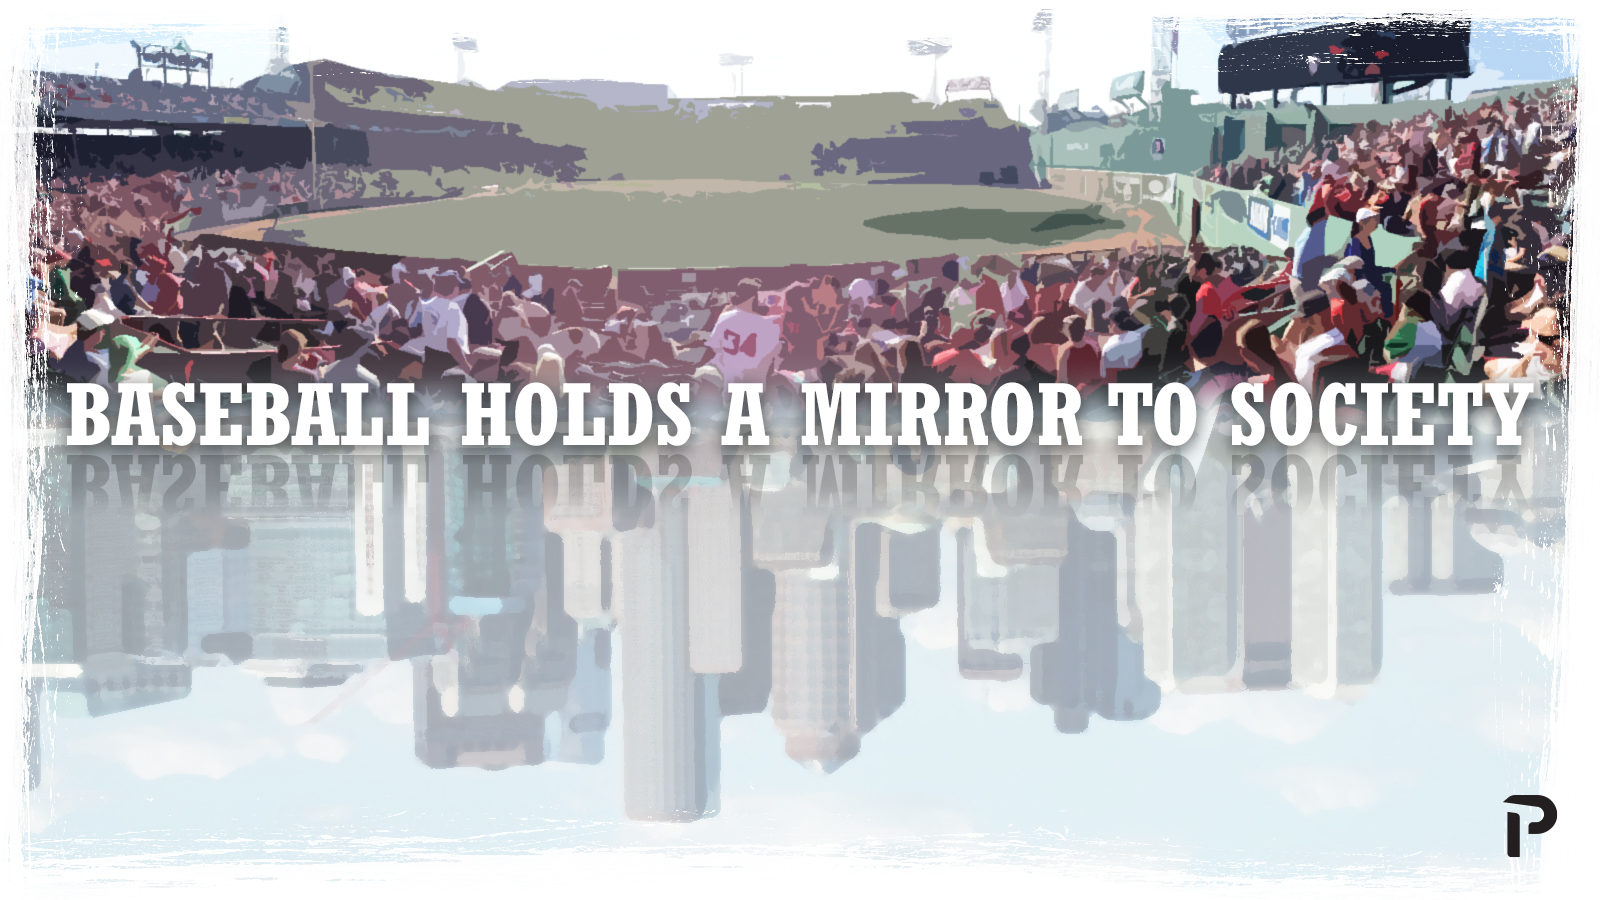 Baltimore Orioles MLB Baseball Mirror